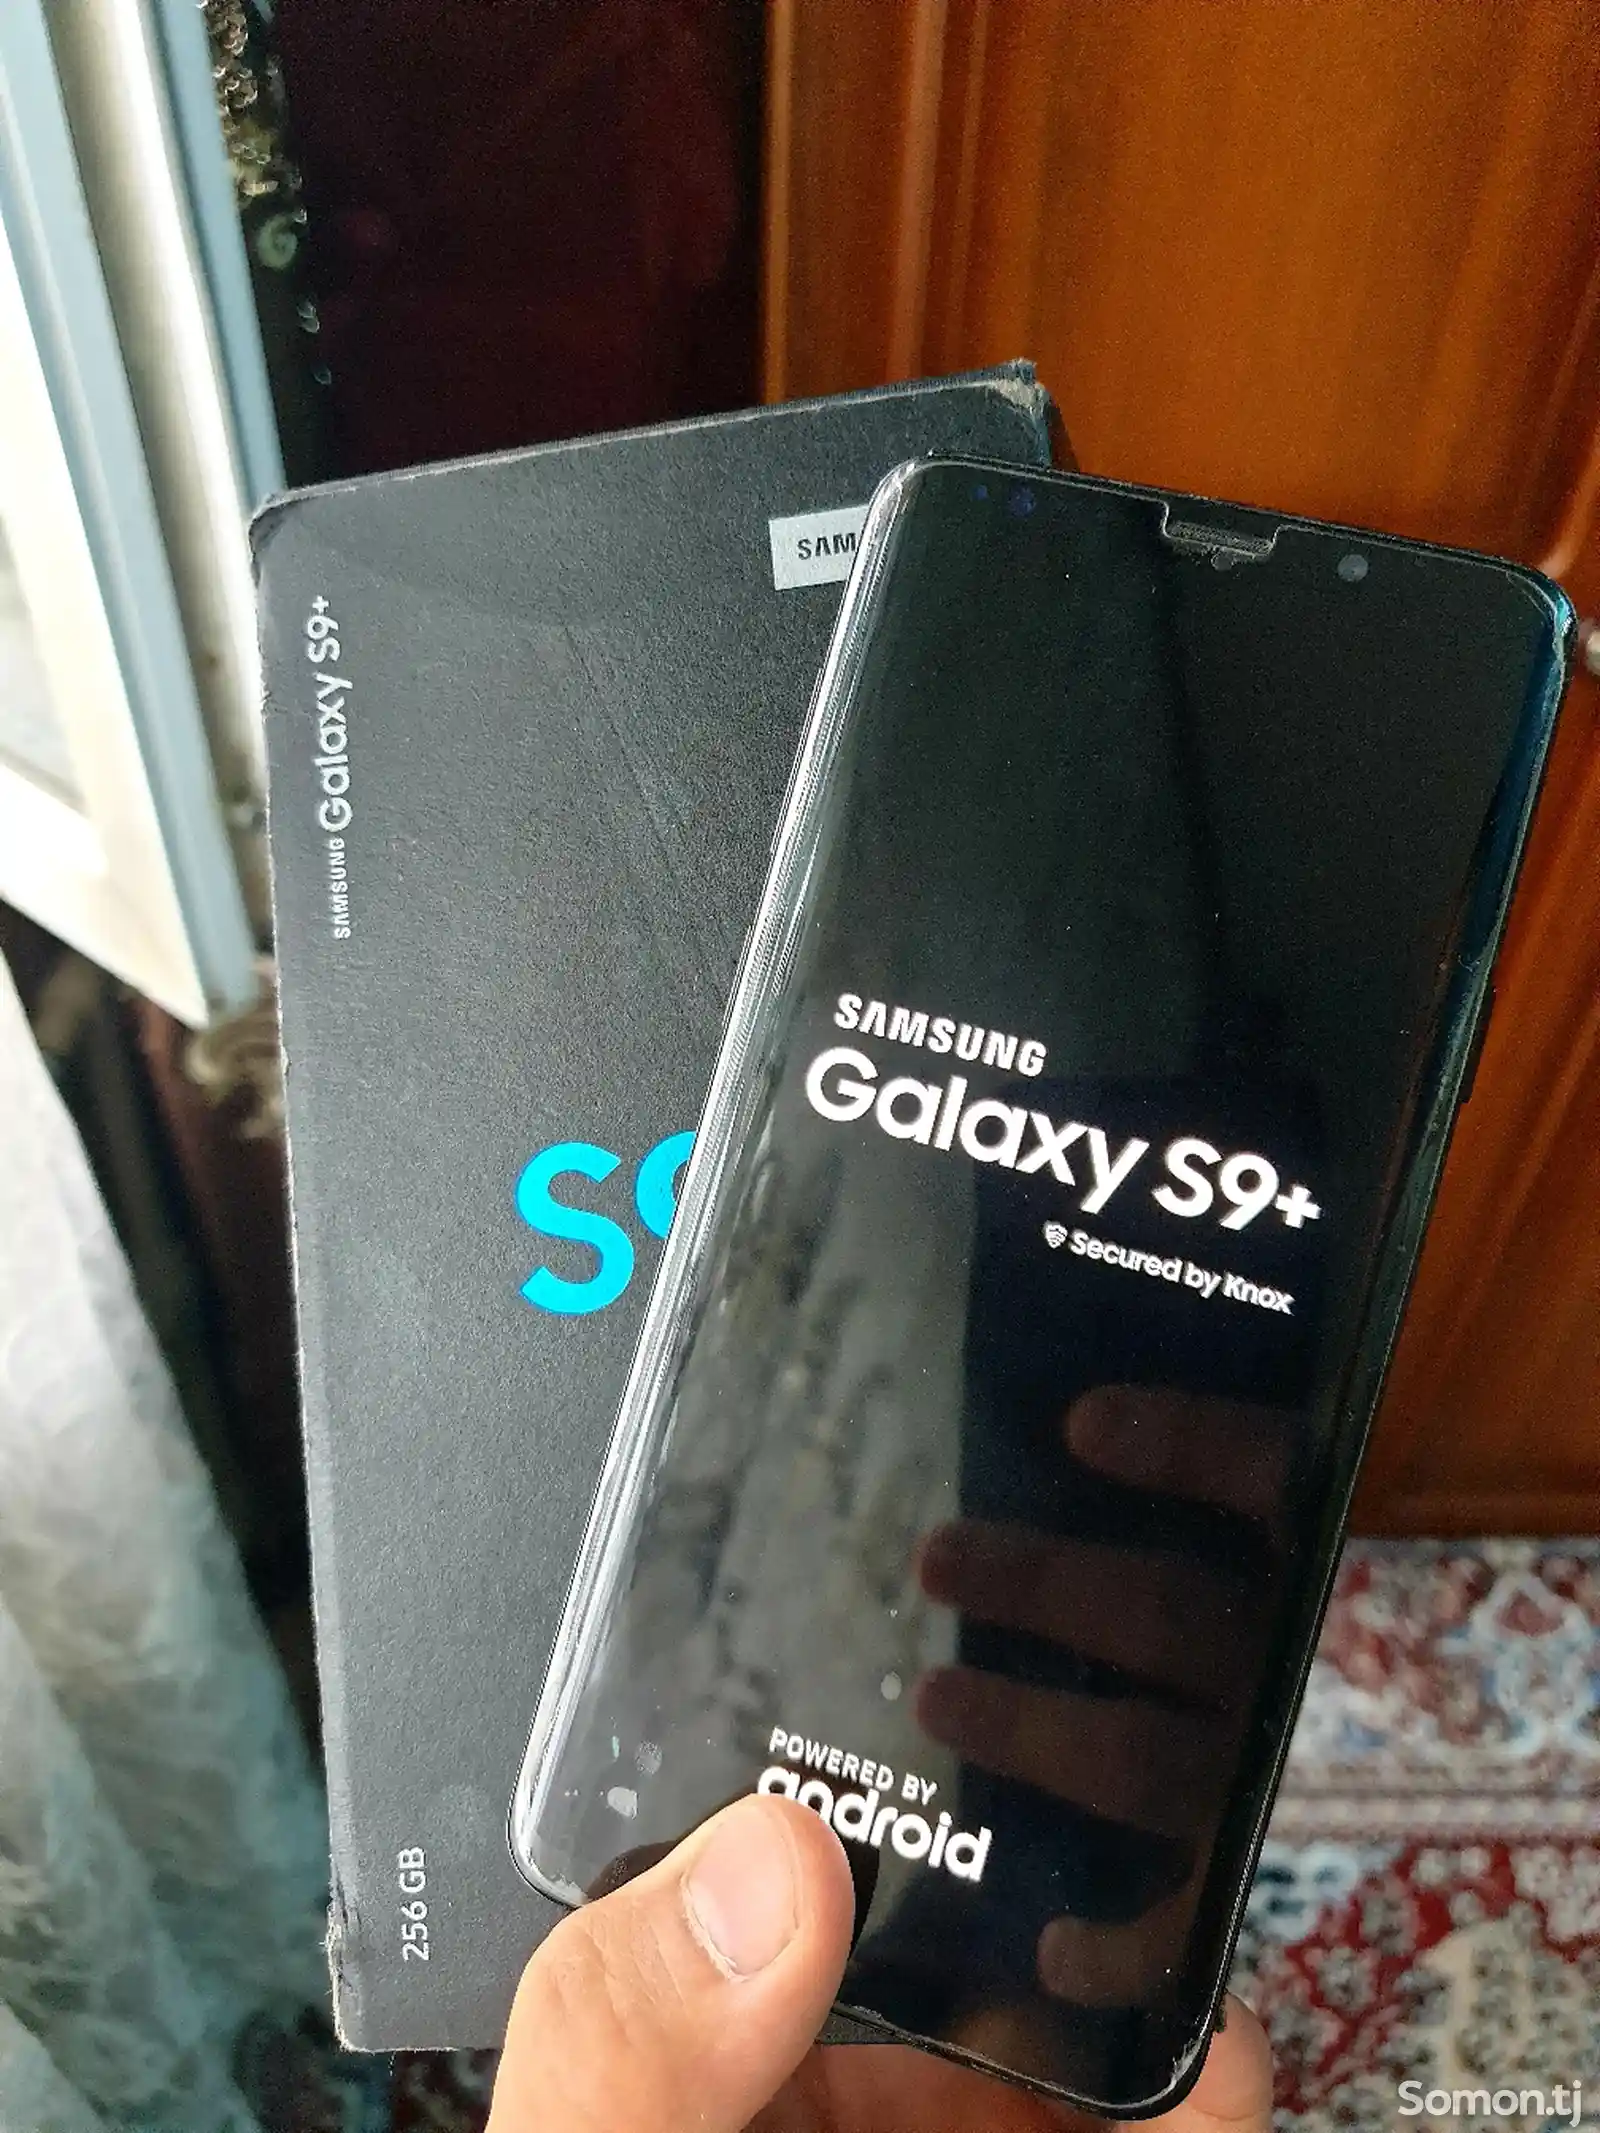 Samsung Galaxy S9+, 256 gb duos-1